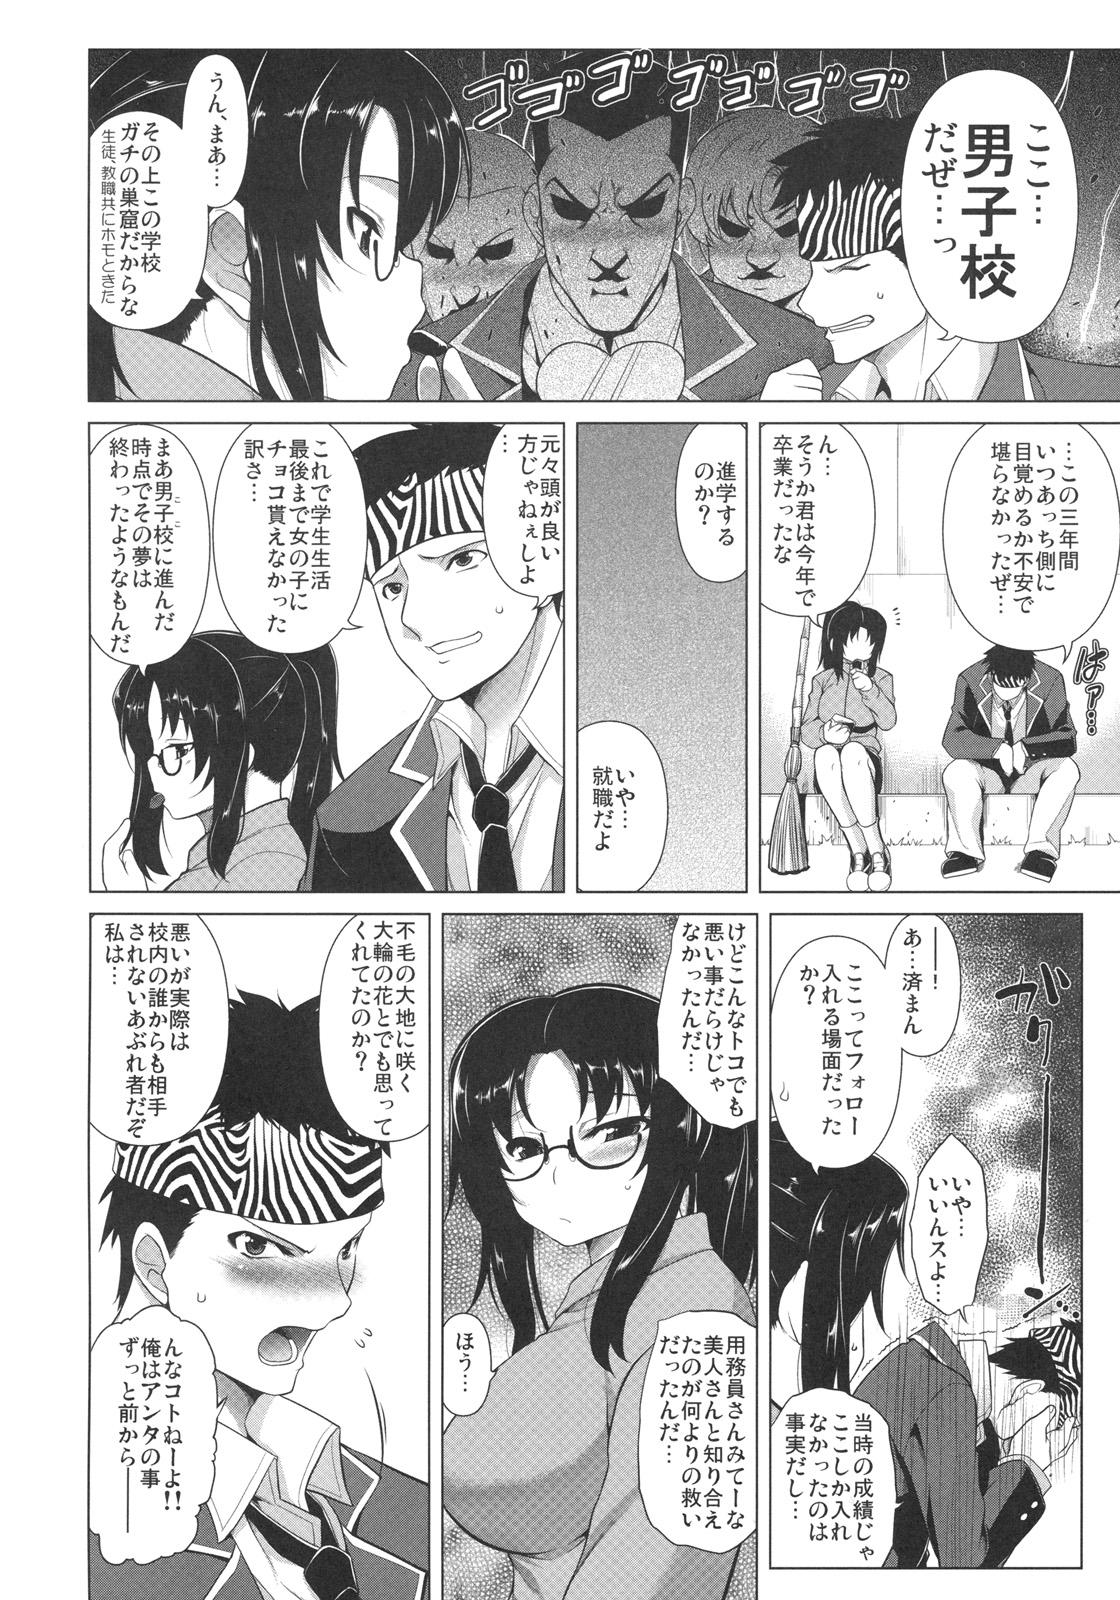 Shinzui Valentine Special Vol. 2 64